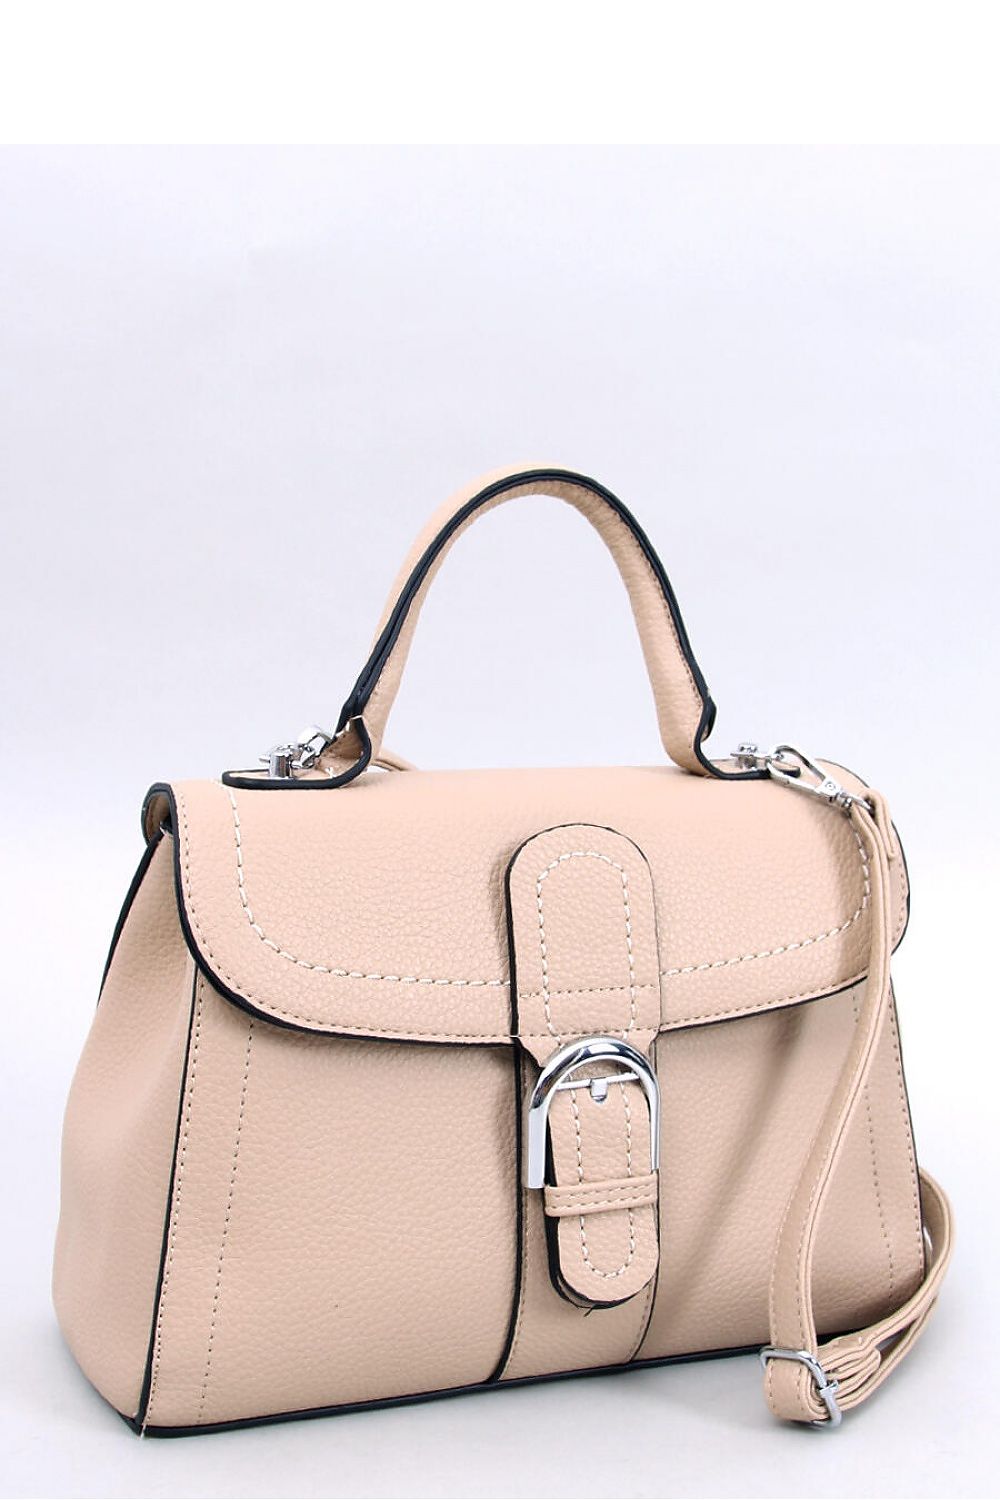 Everyday beige handbag with a long adjustable strap